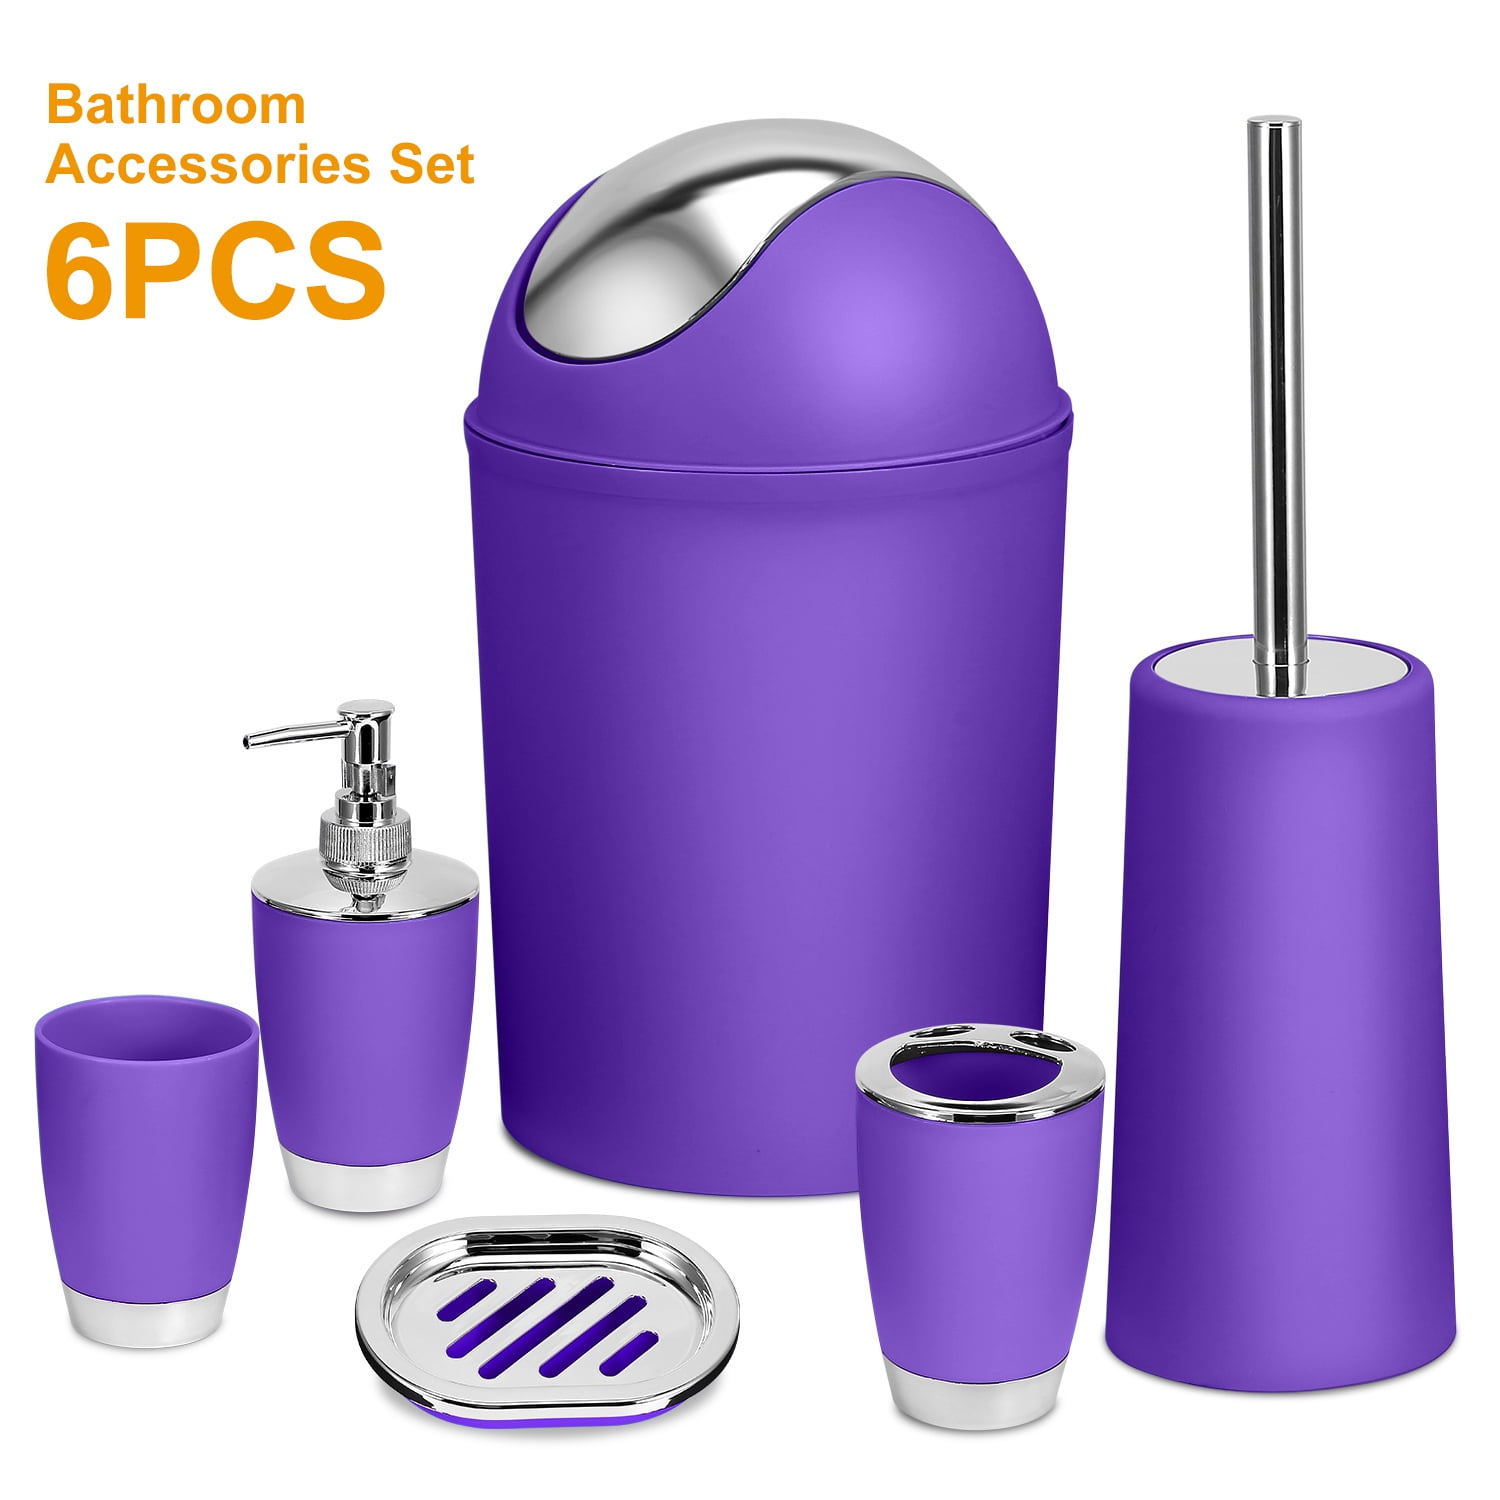 6 Pieces Bathroom Accessories Set Bin Soap Dispenser Toothbrush Tumbler Holder 